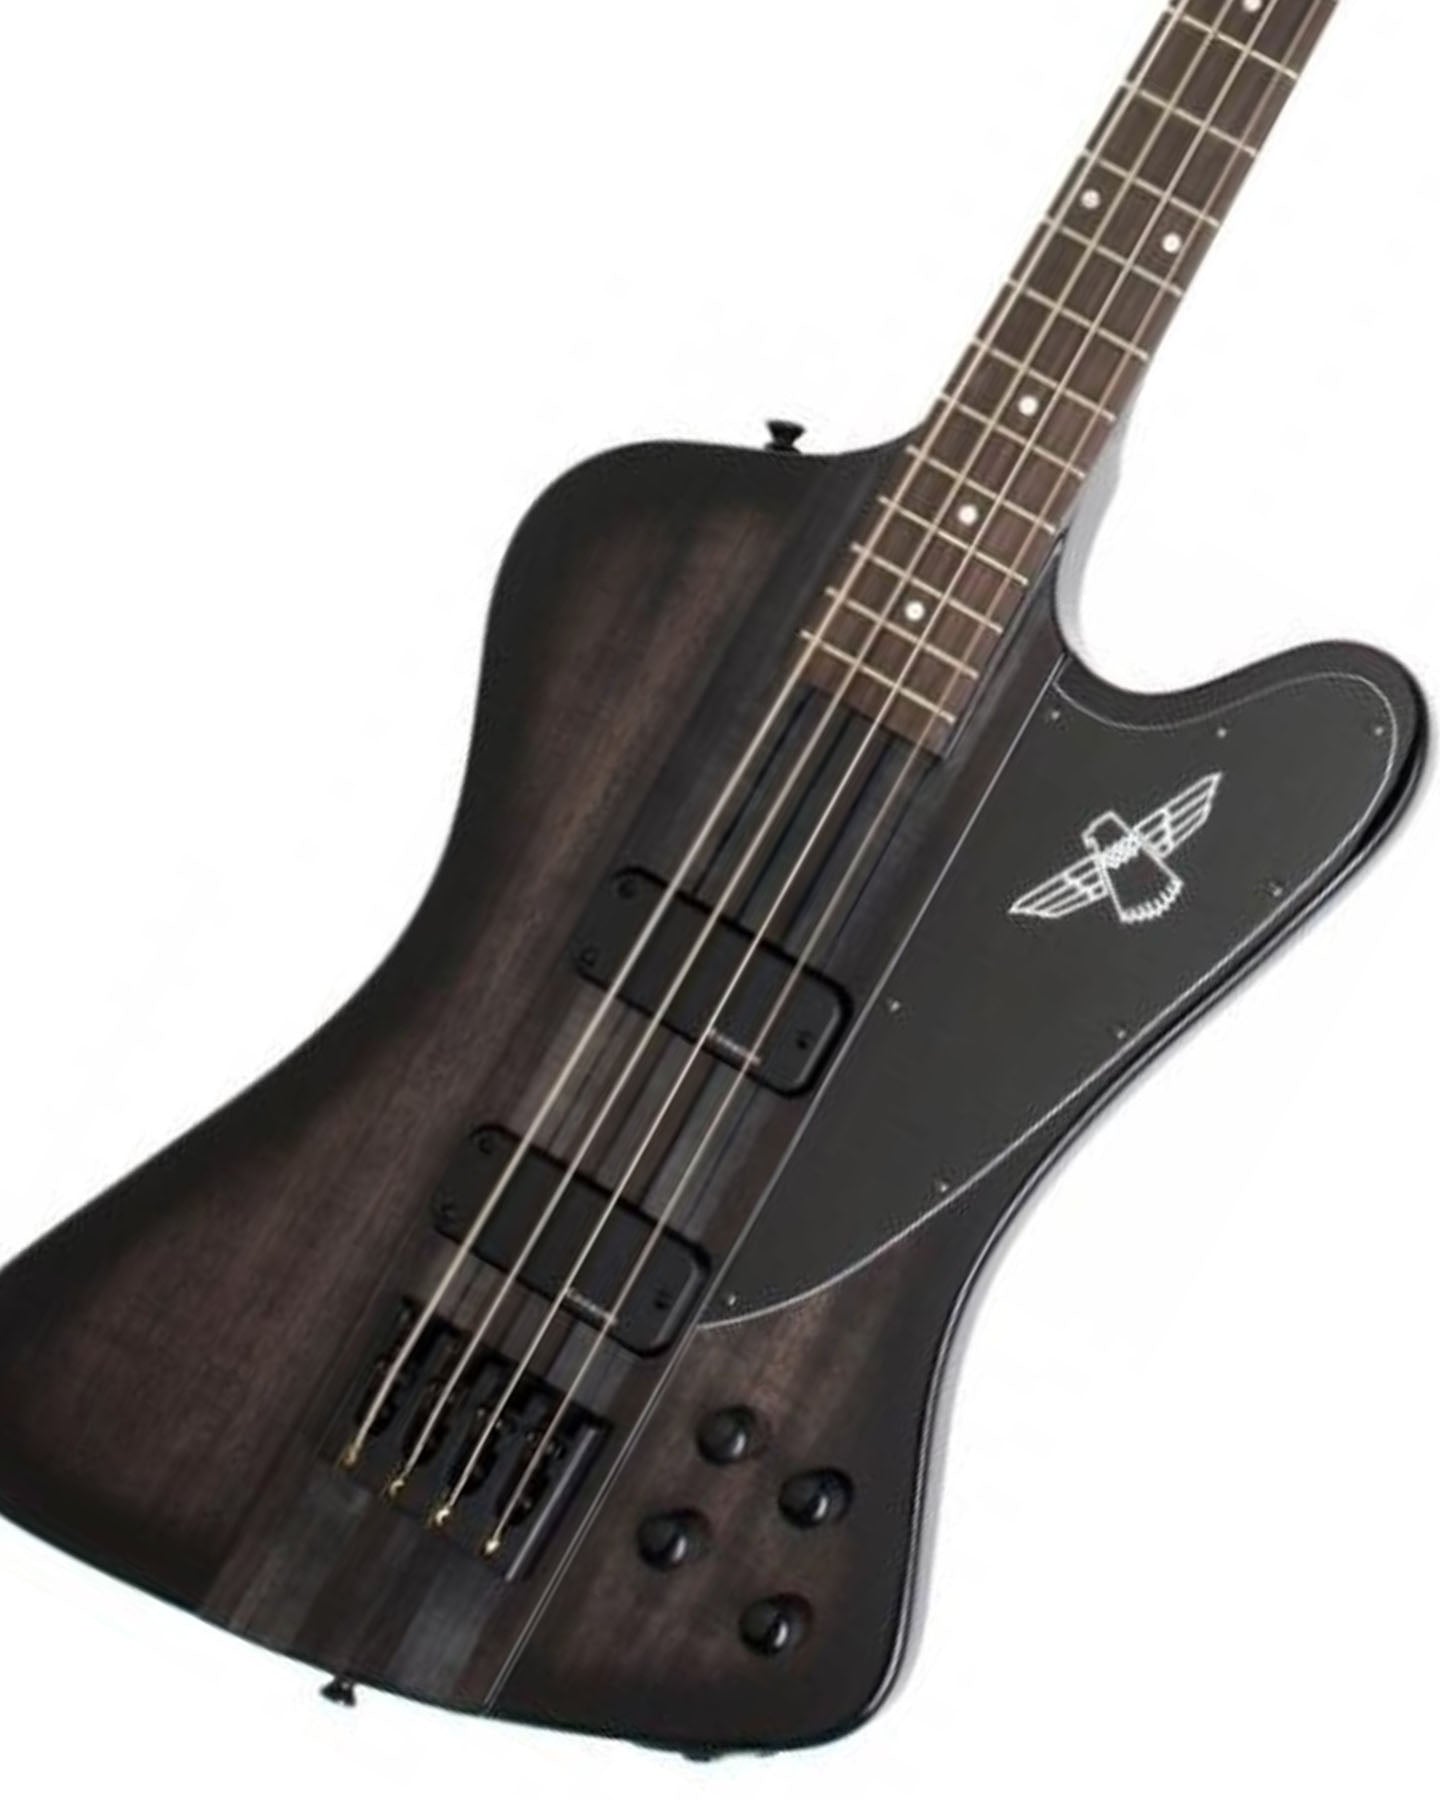 Thunderbird Pro IV Bass Guitar